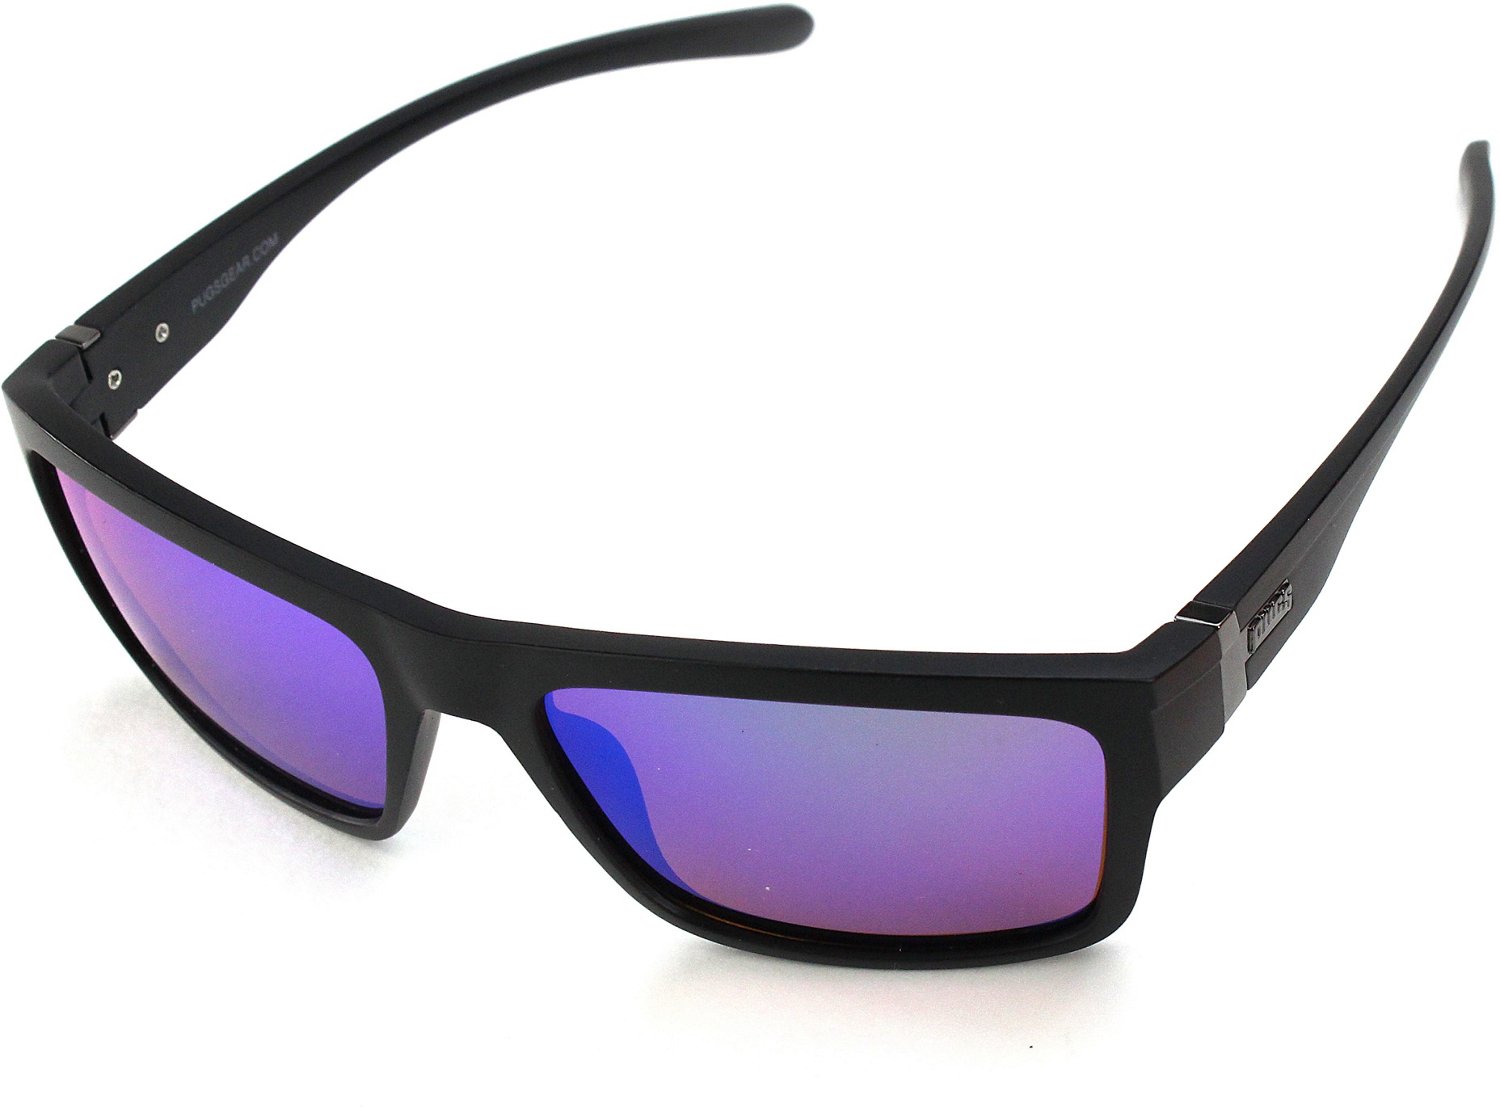 PUGS Sunglasses Black Metal Frame & Brown Bows UV400 - NWT style 1604